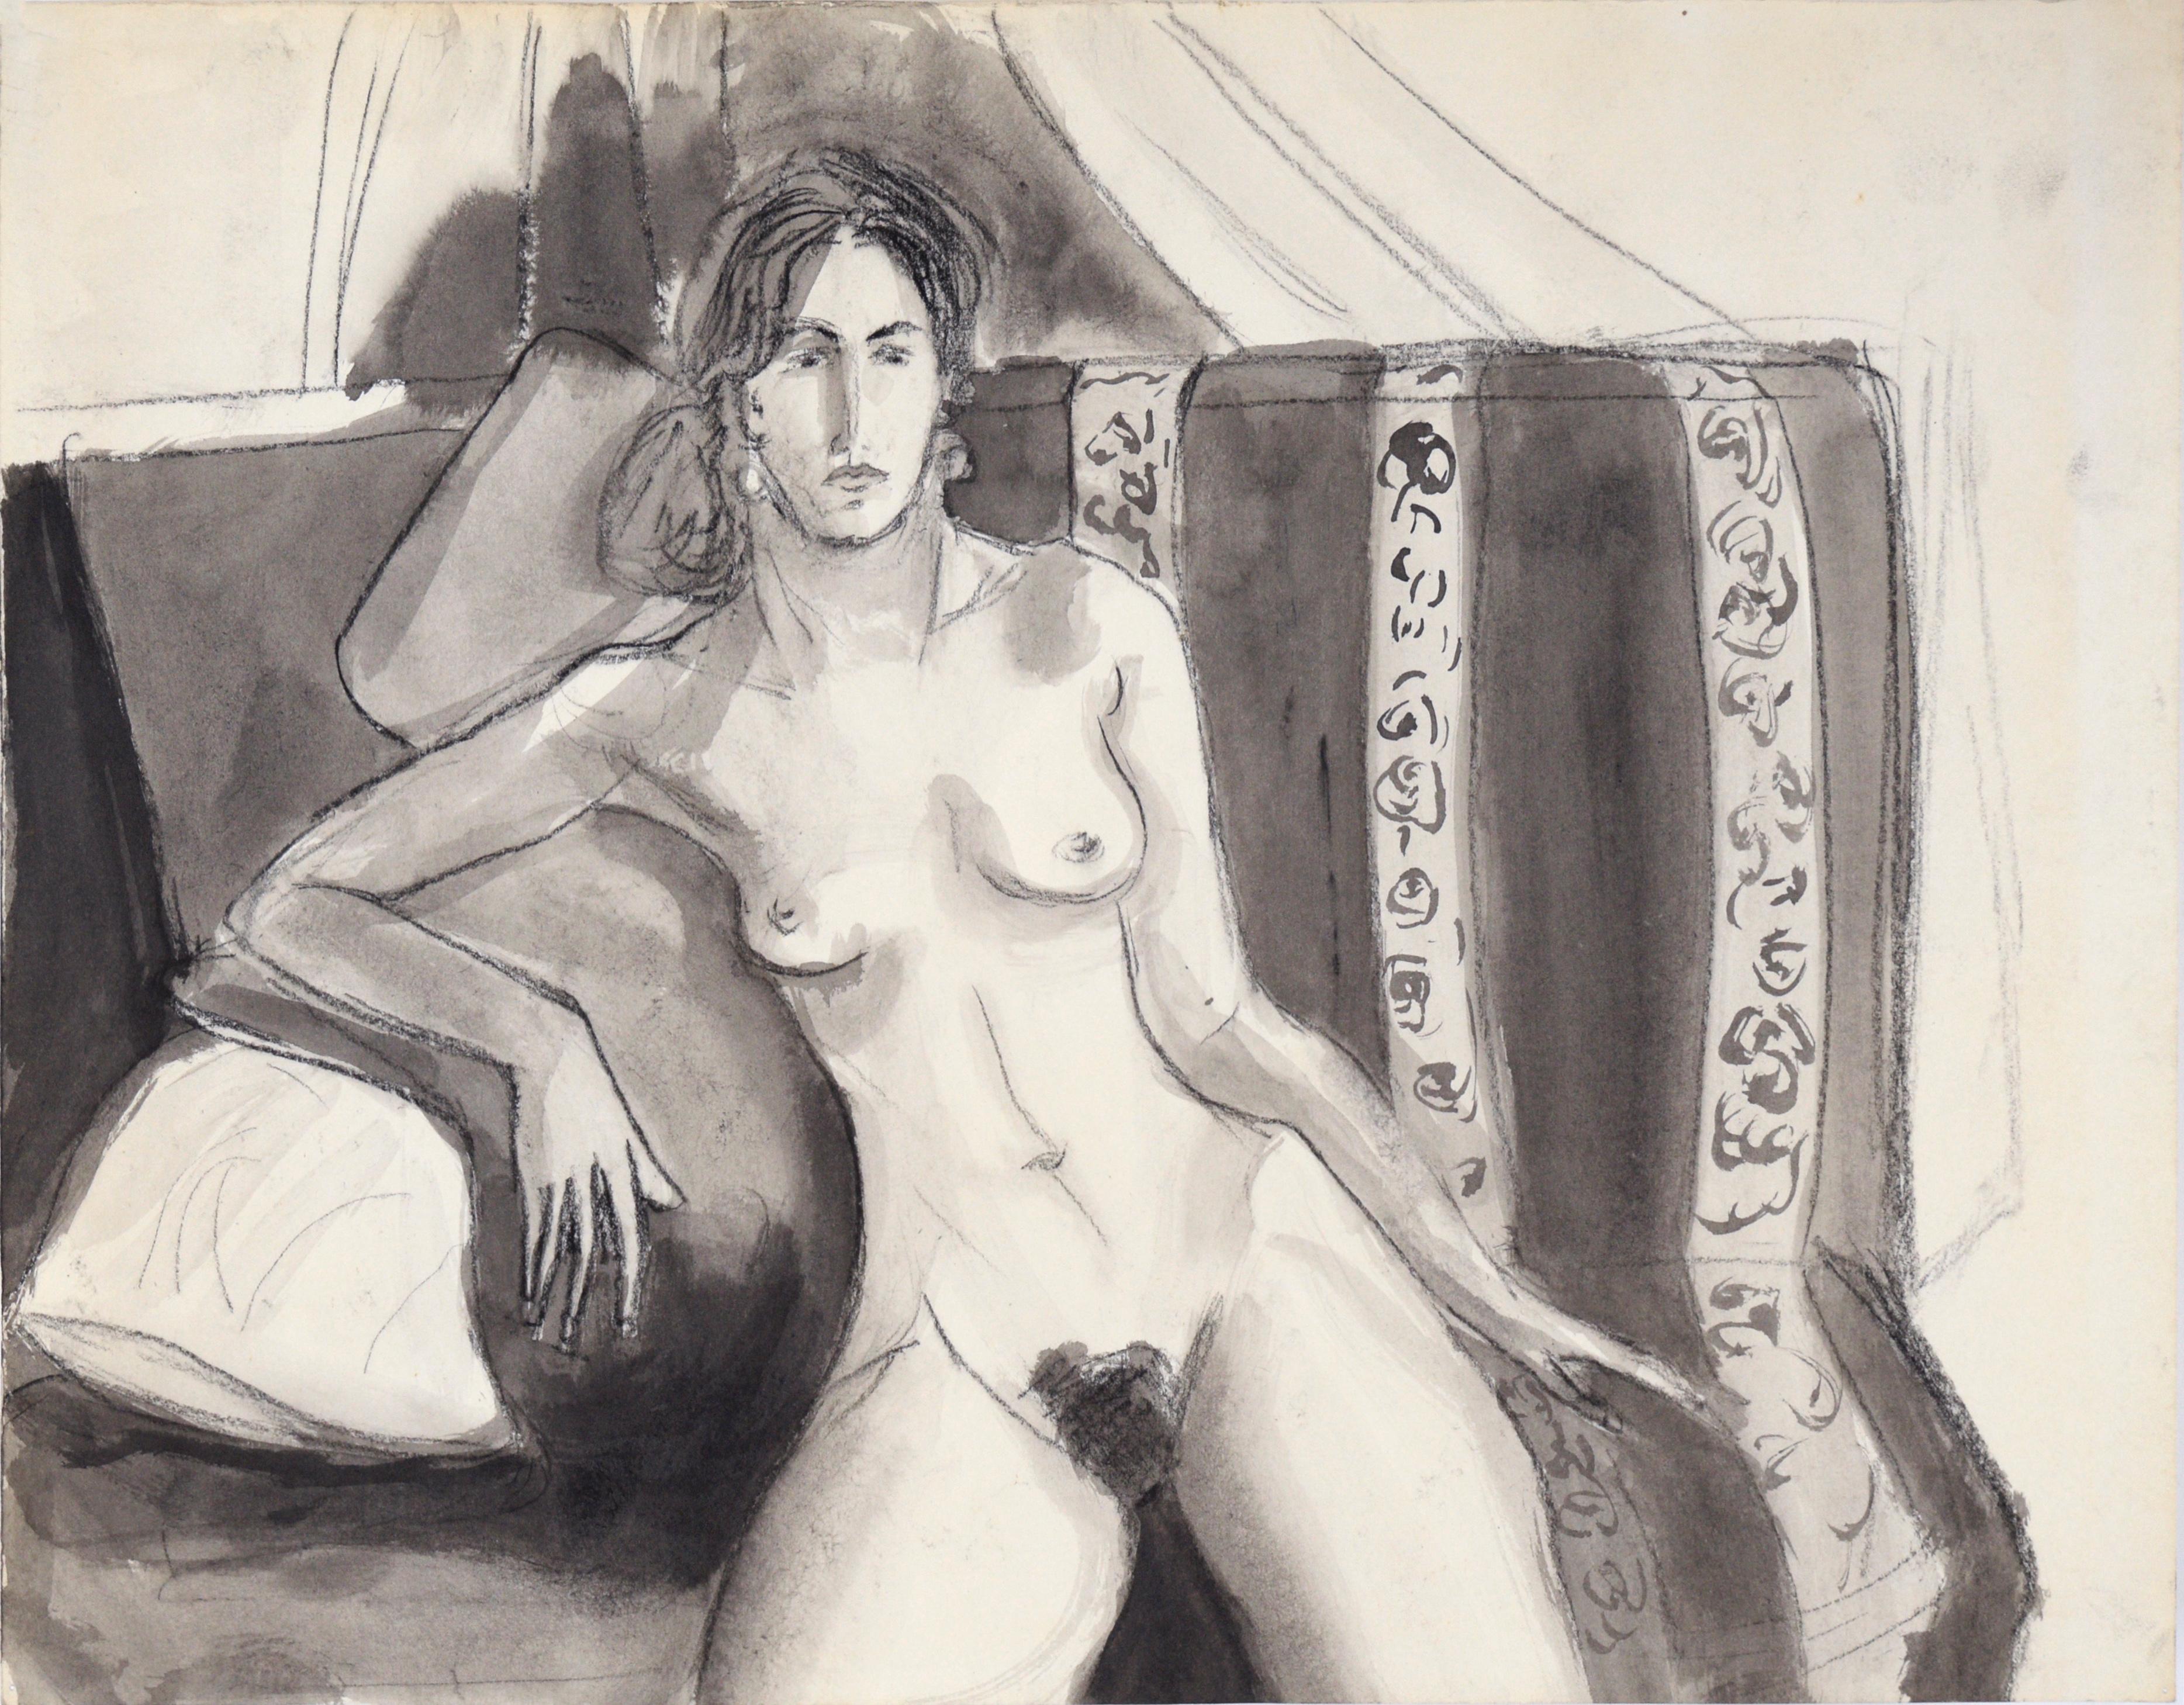 Katherine Kallick Nude Painting – Akt Frau auf gestreiftem Stuhl #1 in Holzkohle und Gouache auf Papier